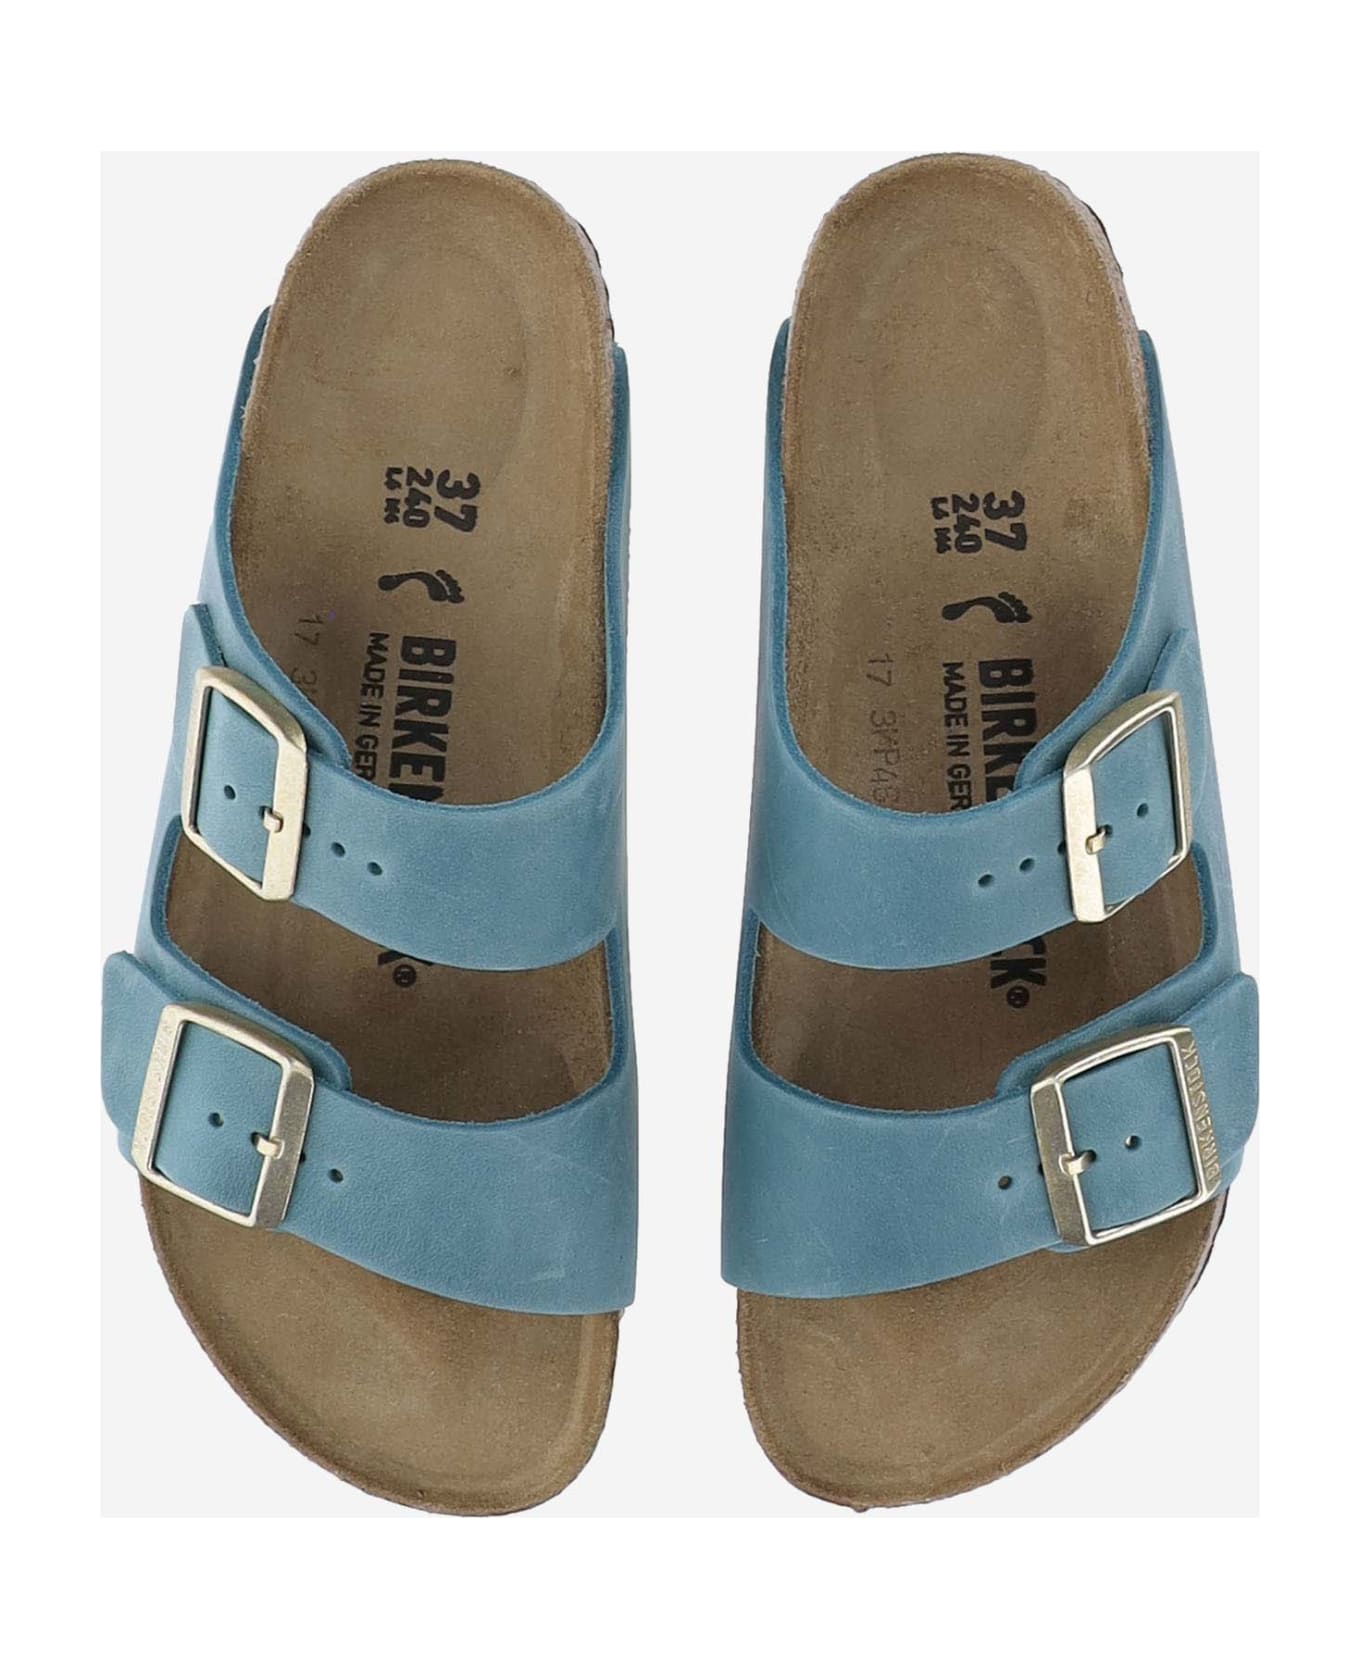 Birkenstock Arizona Suede Sandals - Clear Blue